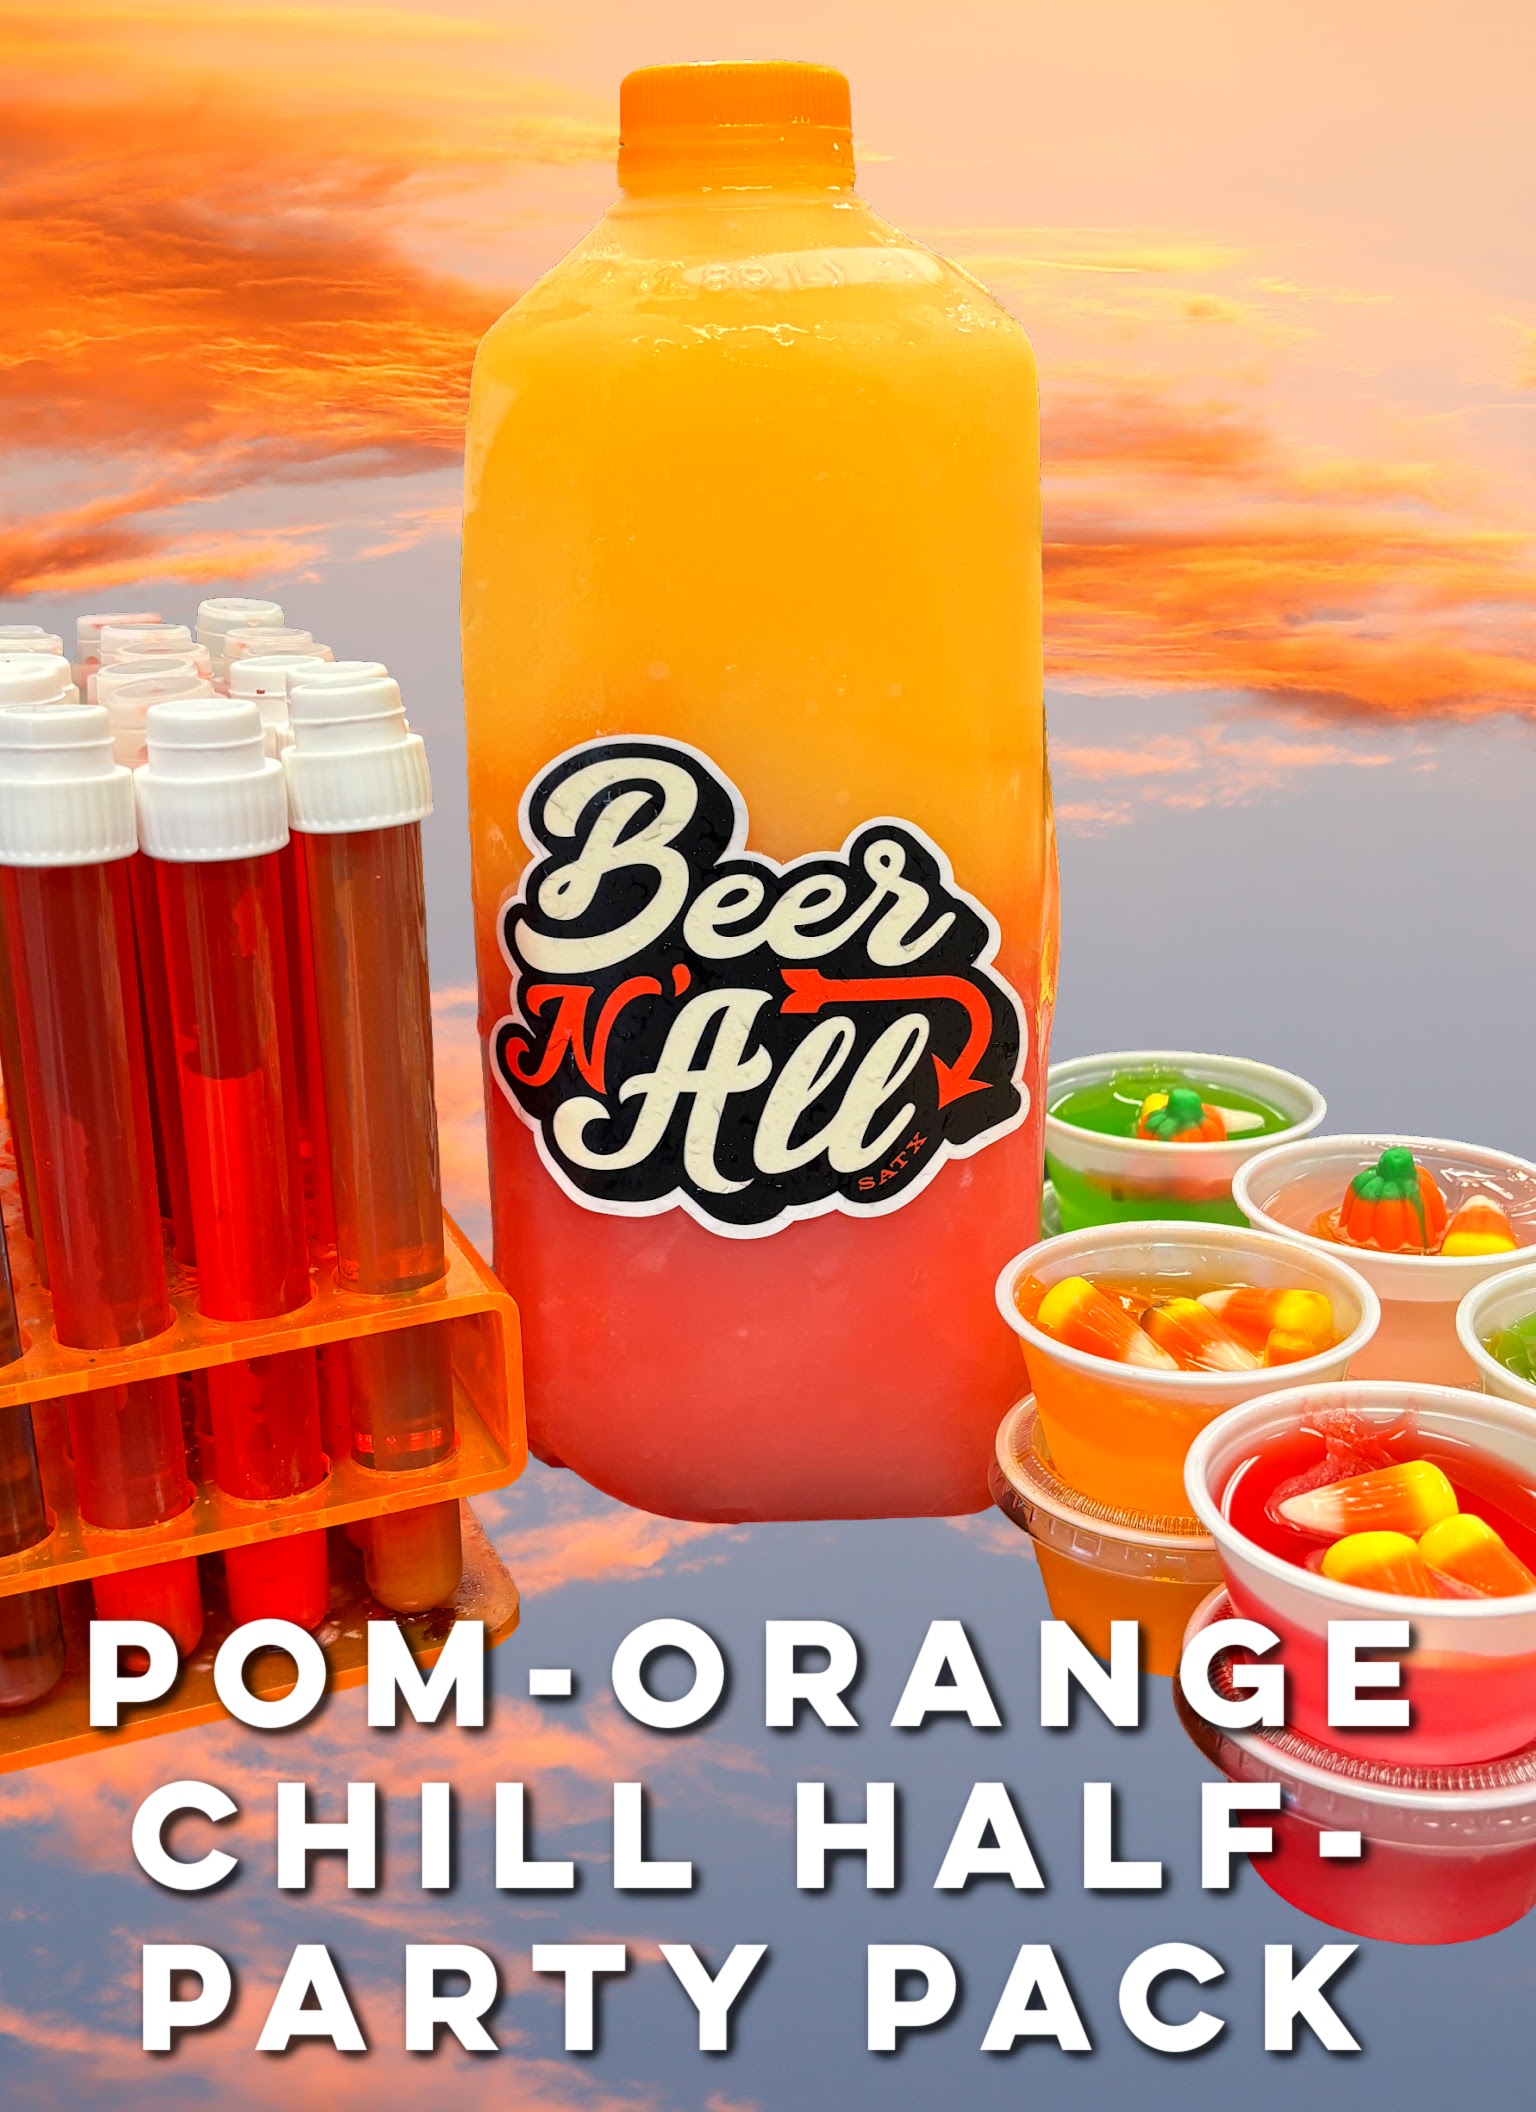 Pom-Orange Chill Half-Party Pack